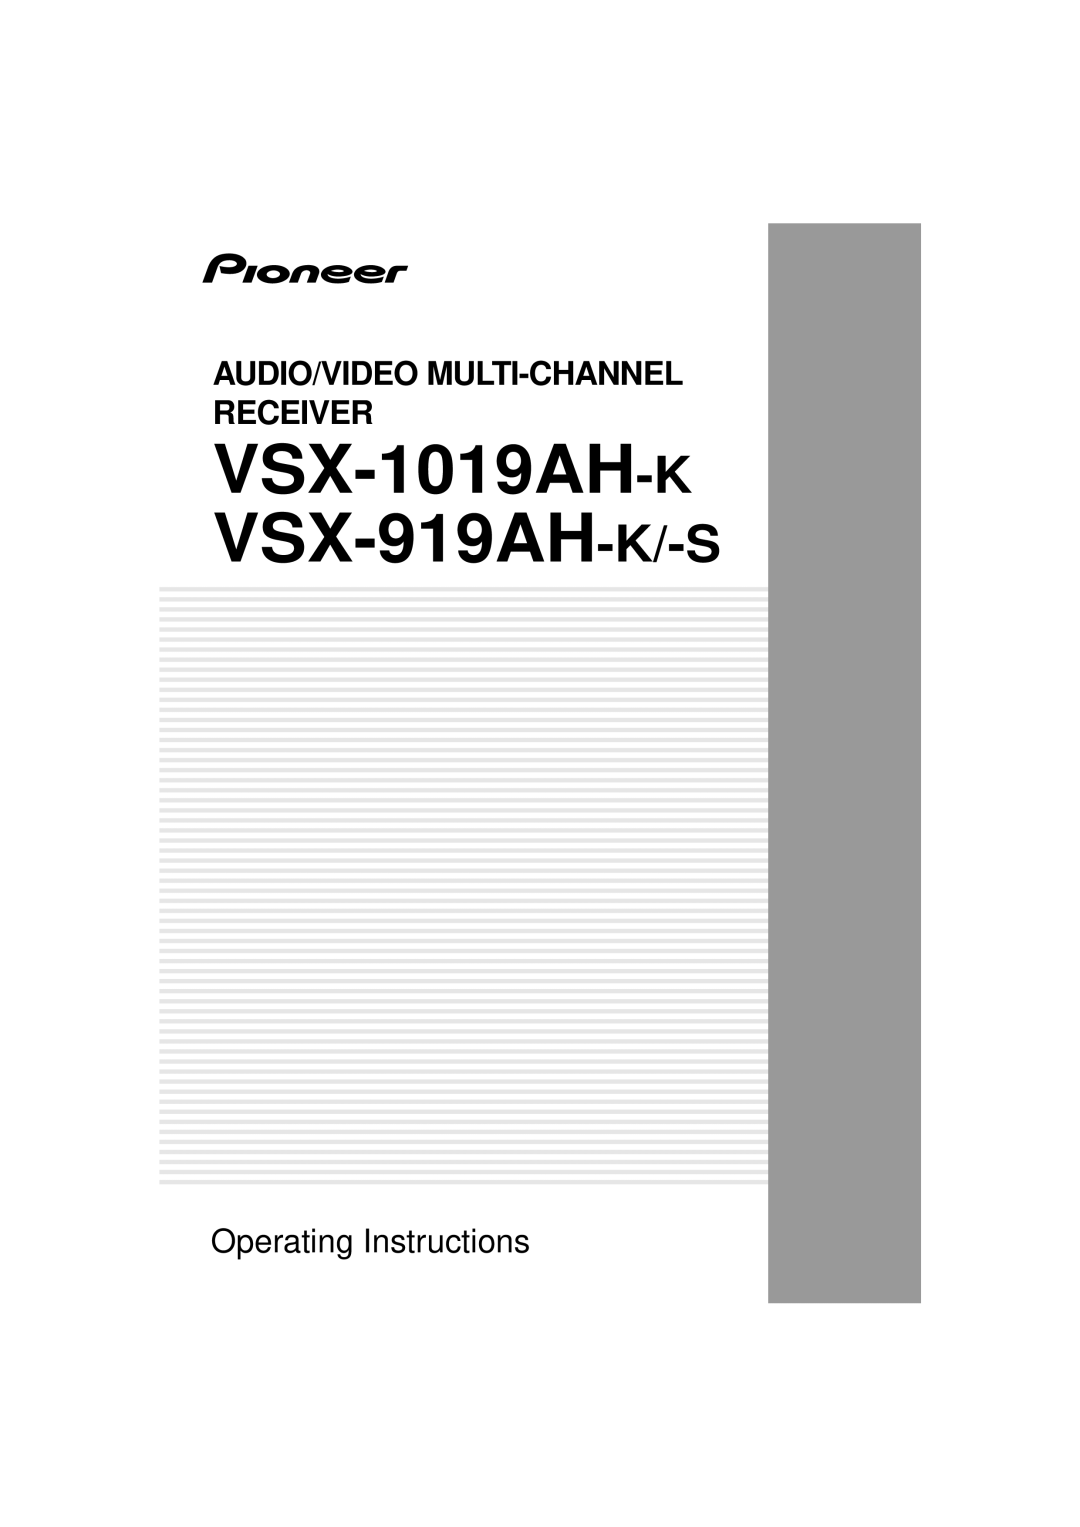 Pioneer VSX-919AH-S manual VSX-1019AH-K VSX-919AH-K/-S, Audio/Video Multi-Channel Receiver, Operating Instructions 